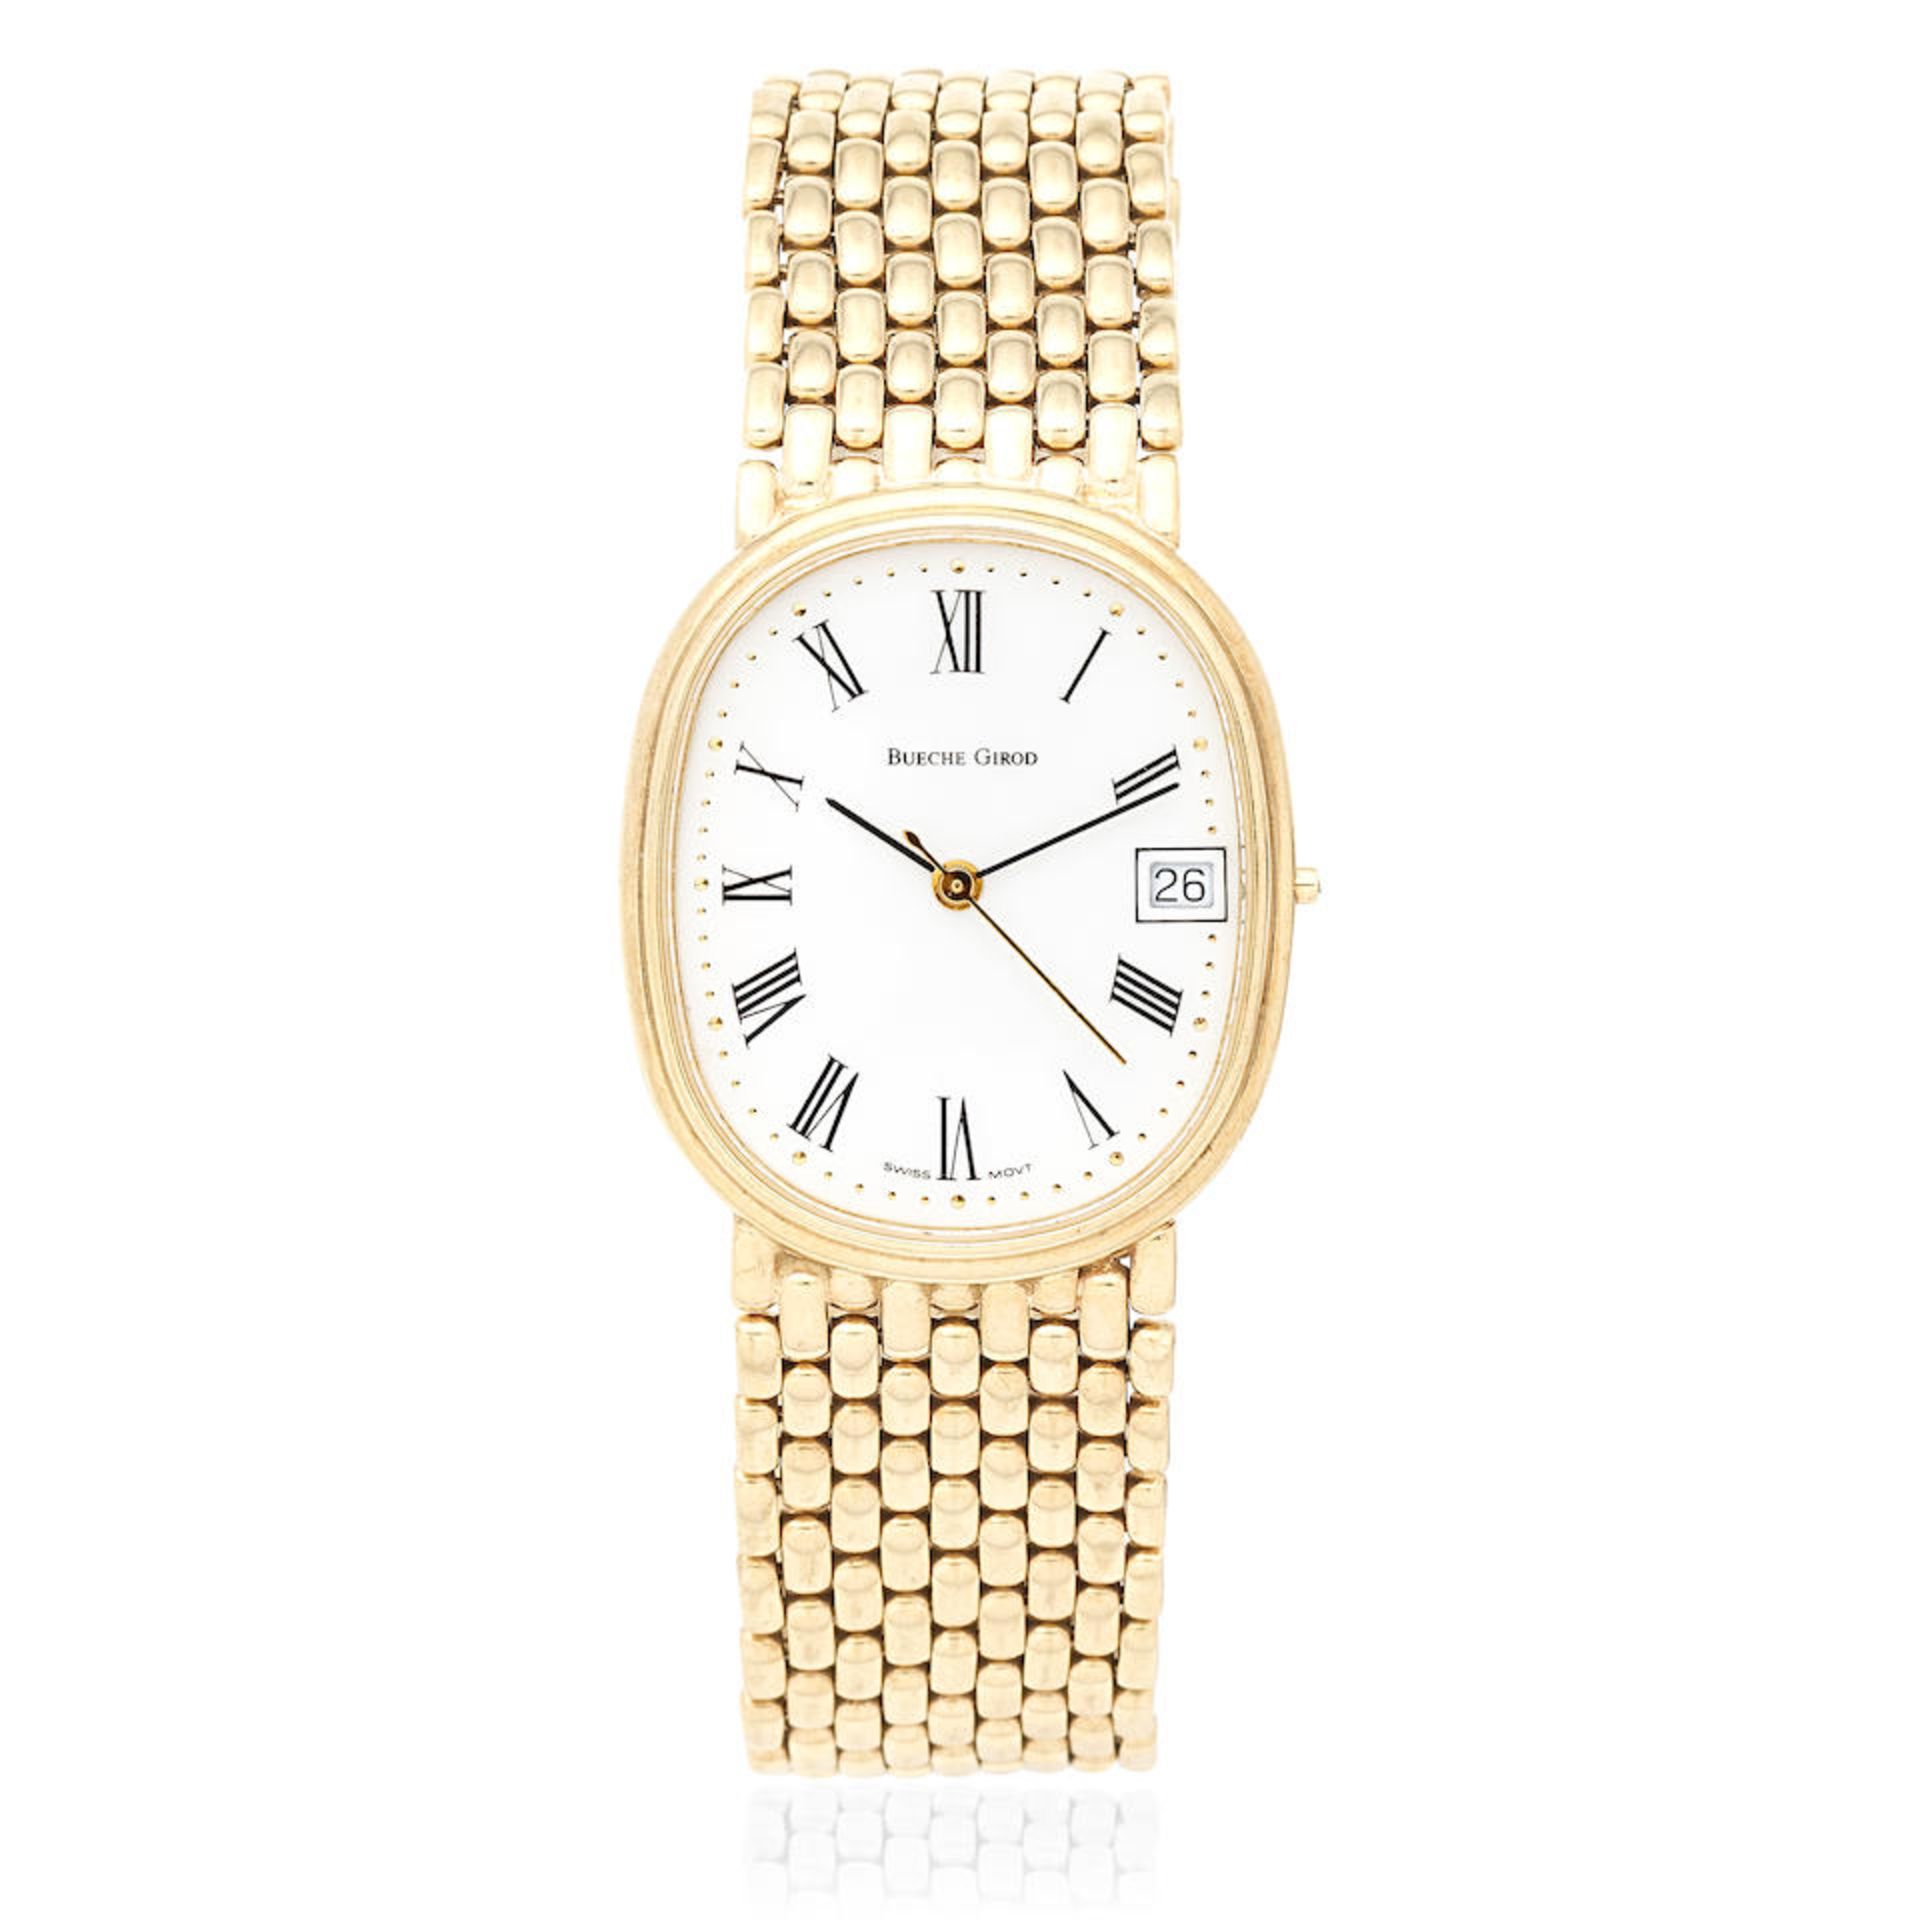 Bueche-Girod. A 9K gold quartz calendar bracelet watch (AF) Ref: 2001, Purchased 17th May 1994